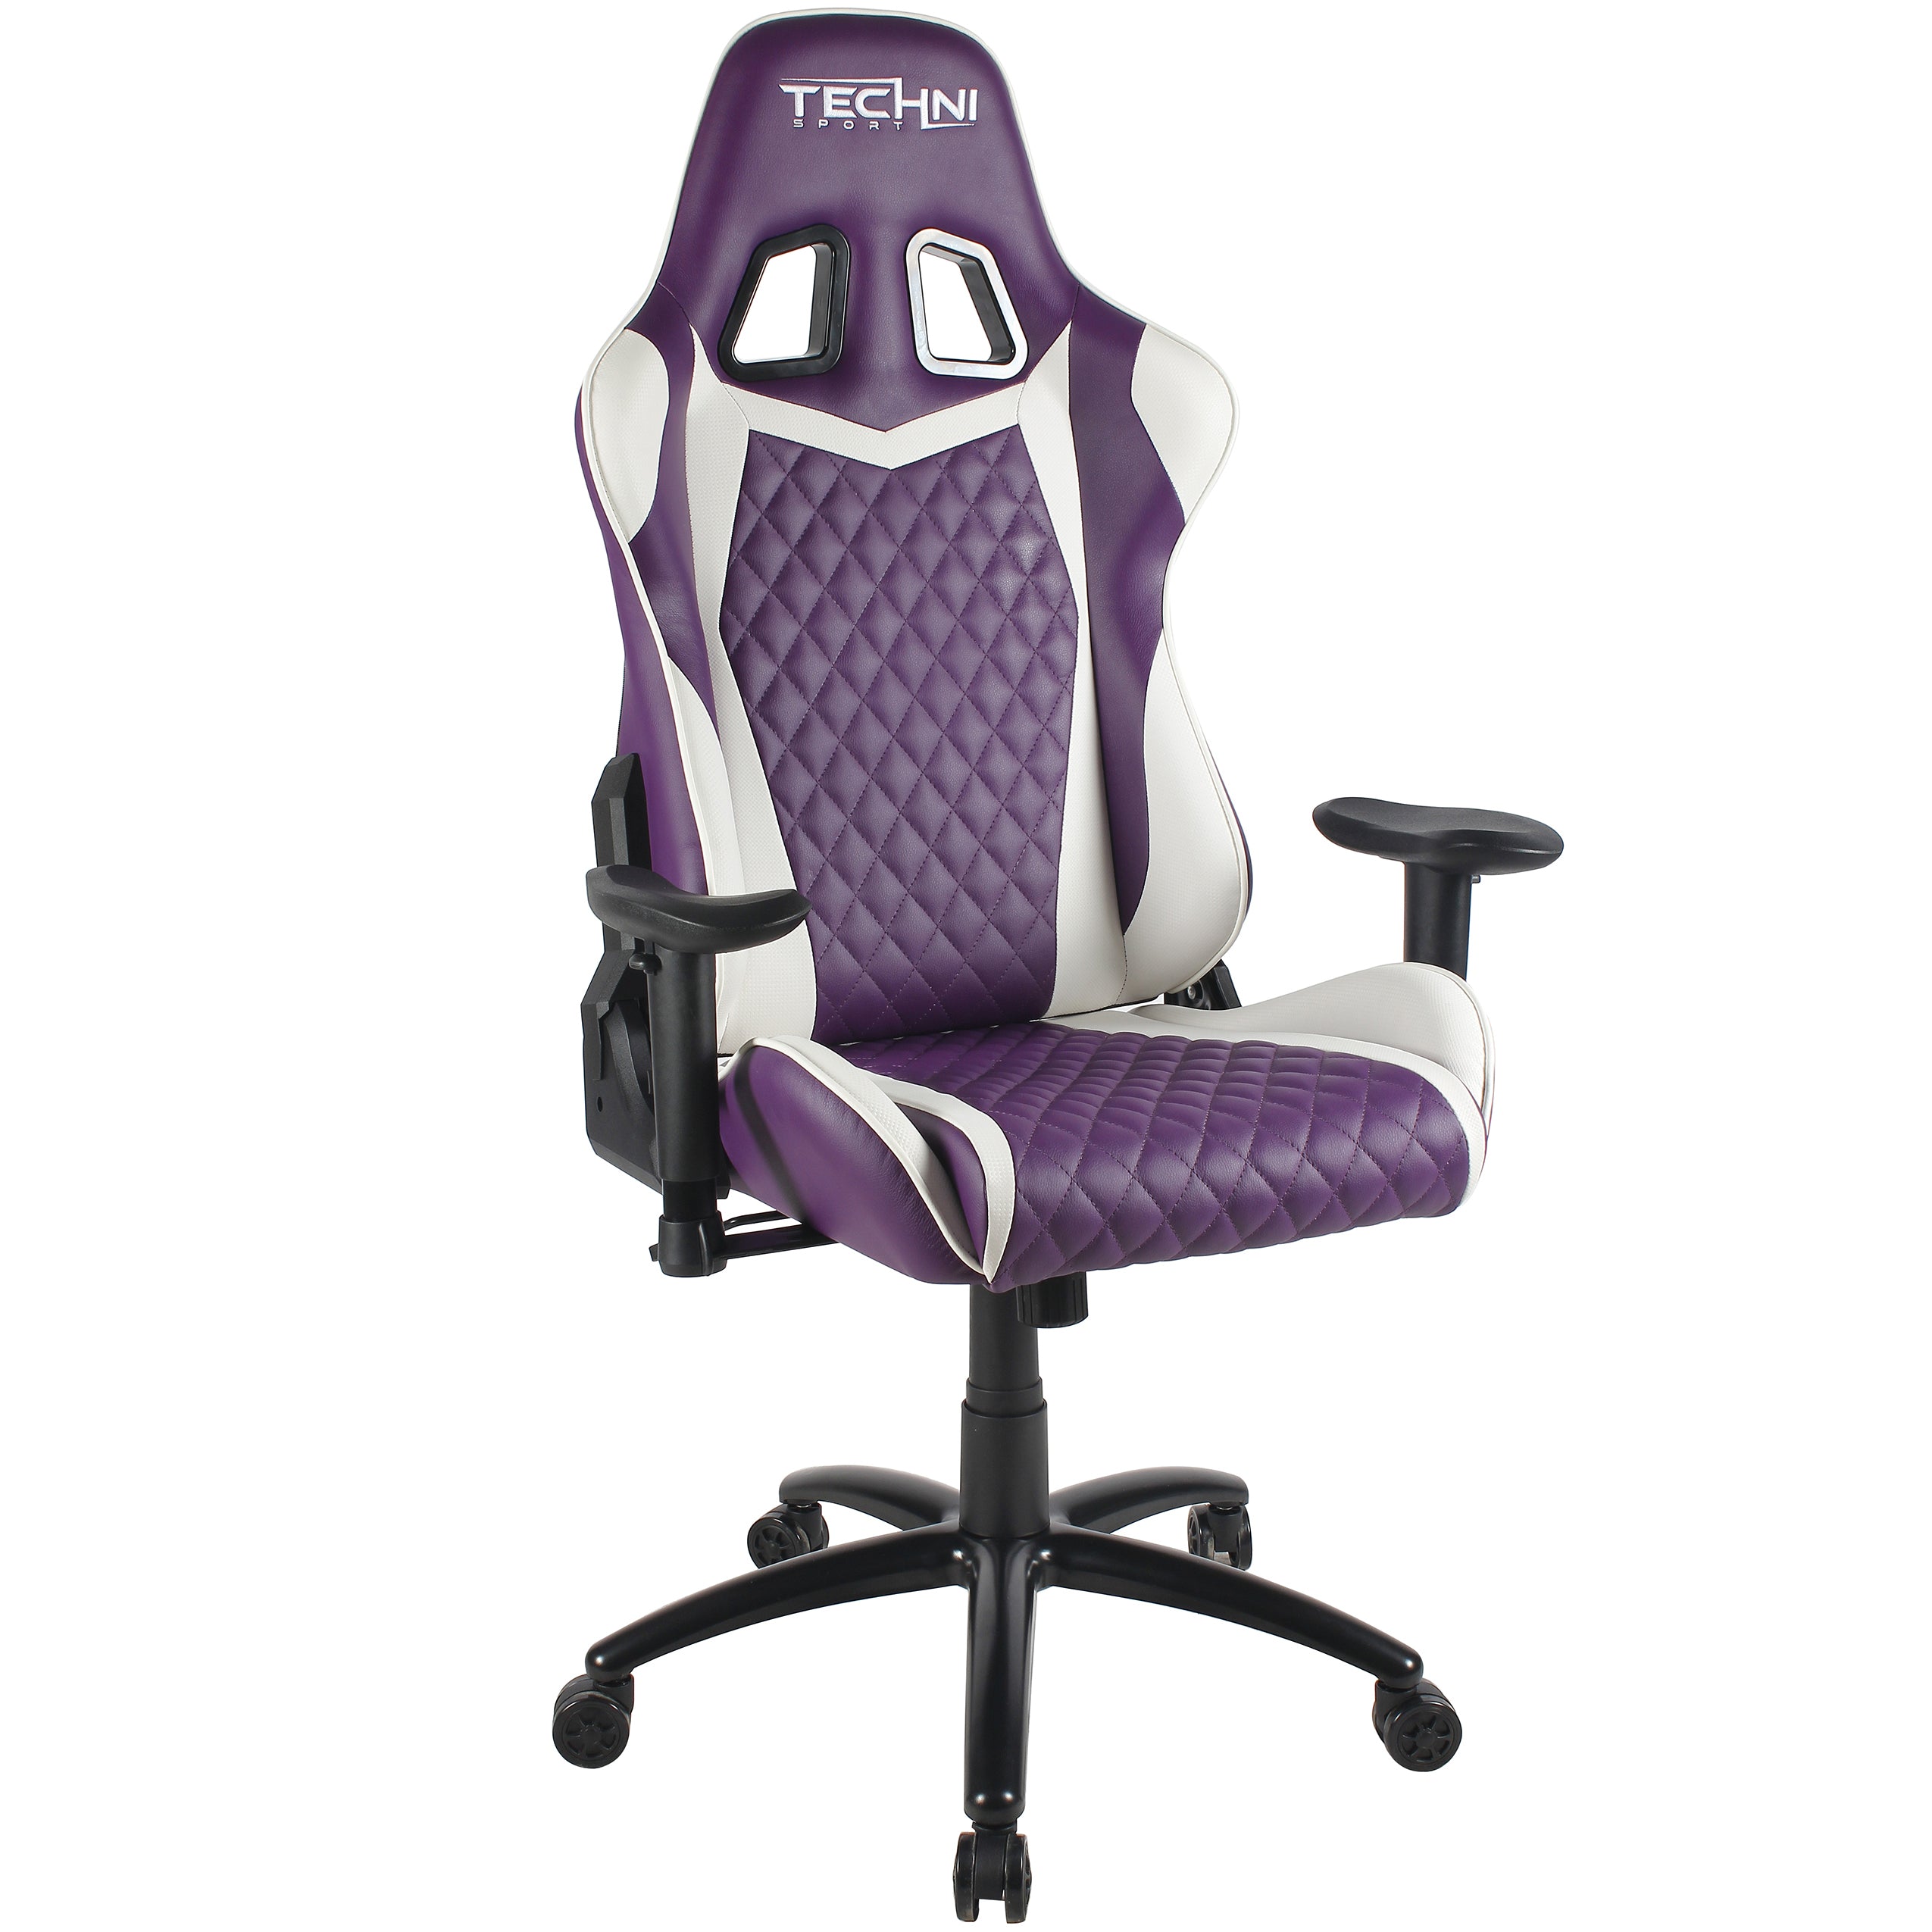 Techni Sport TS-52 Ergonomic High Back Racing Style Gaming Chair (Purple)